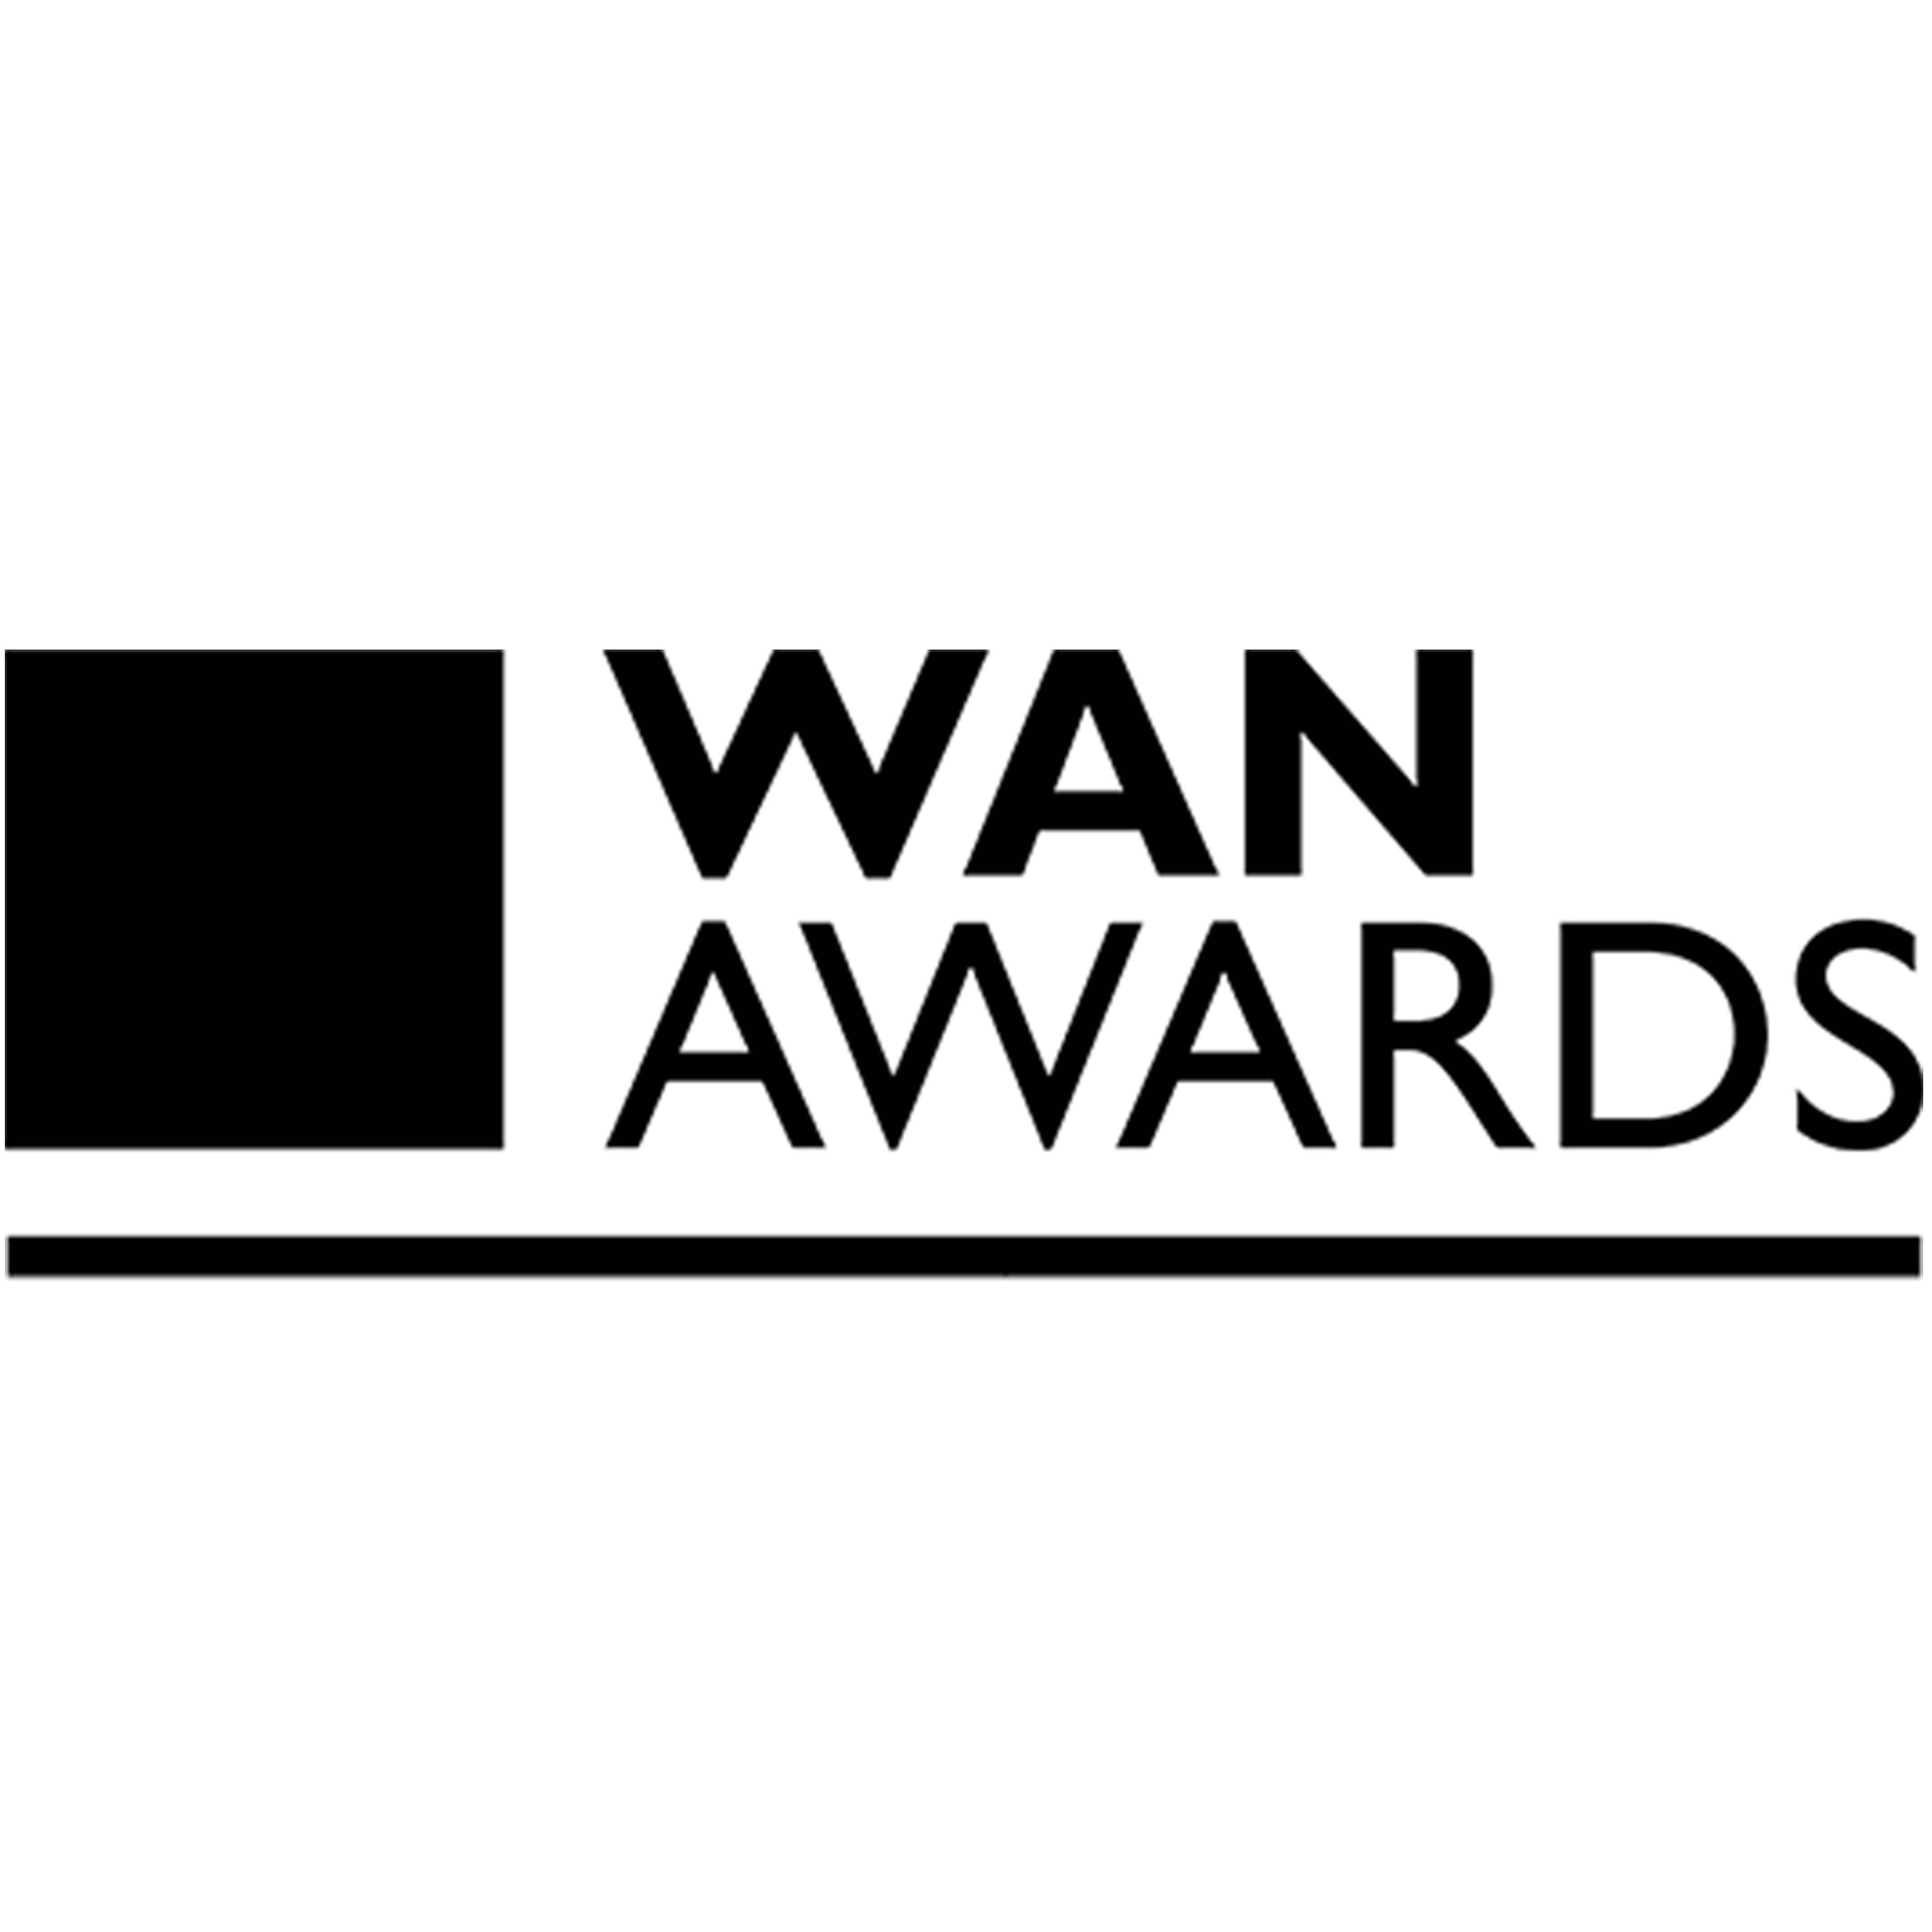 World Architecture News Awards (WAN)